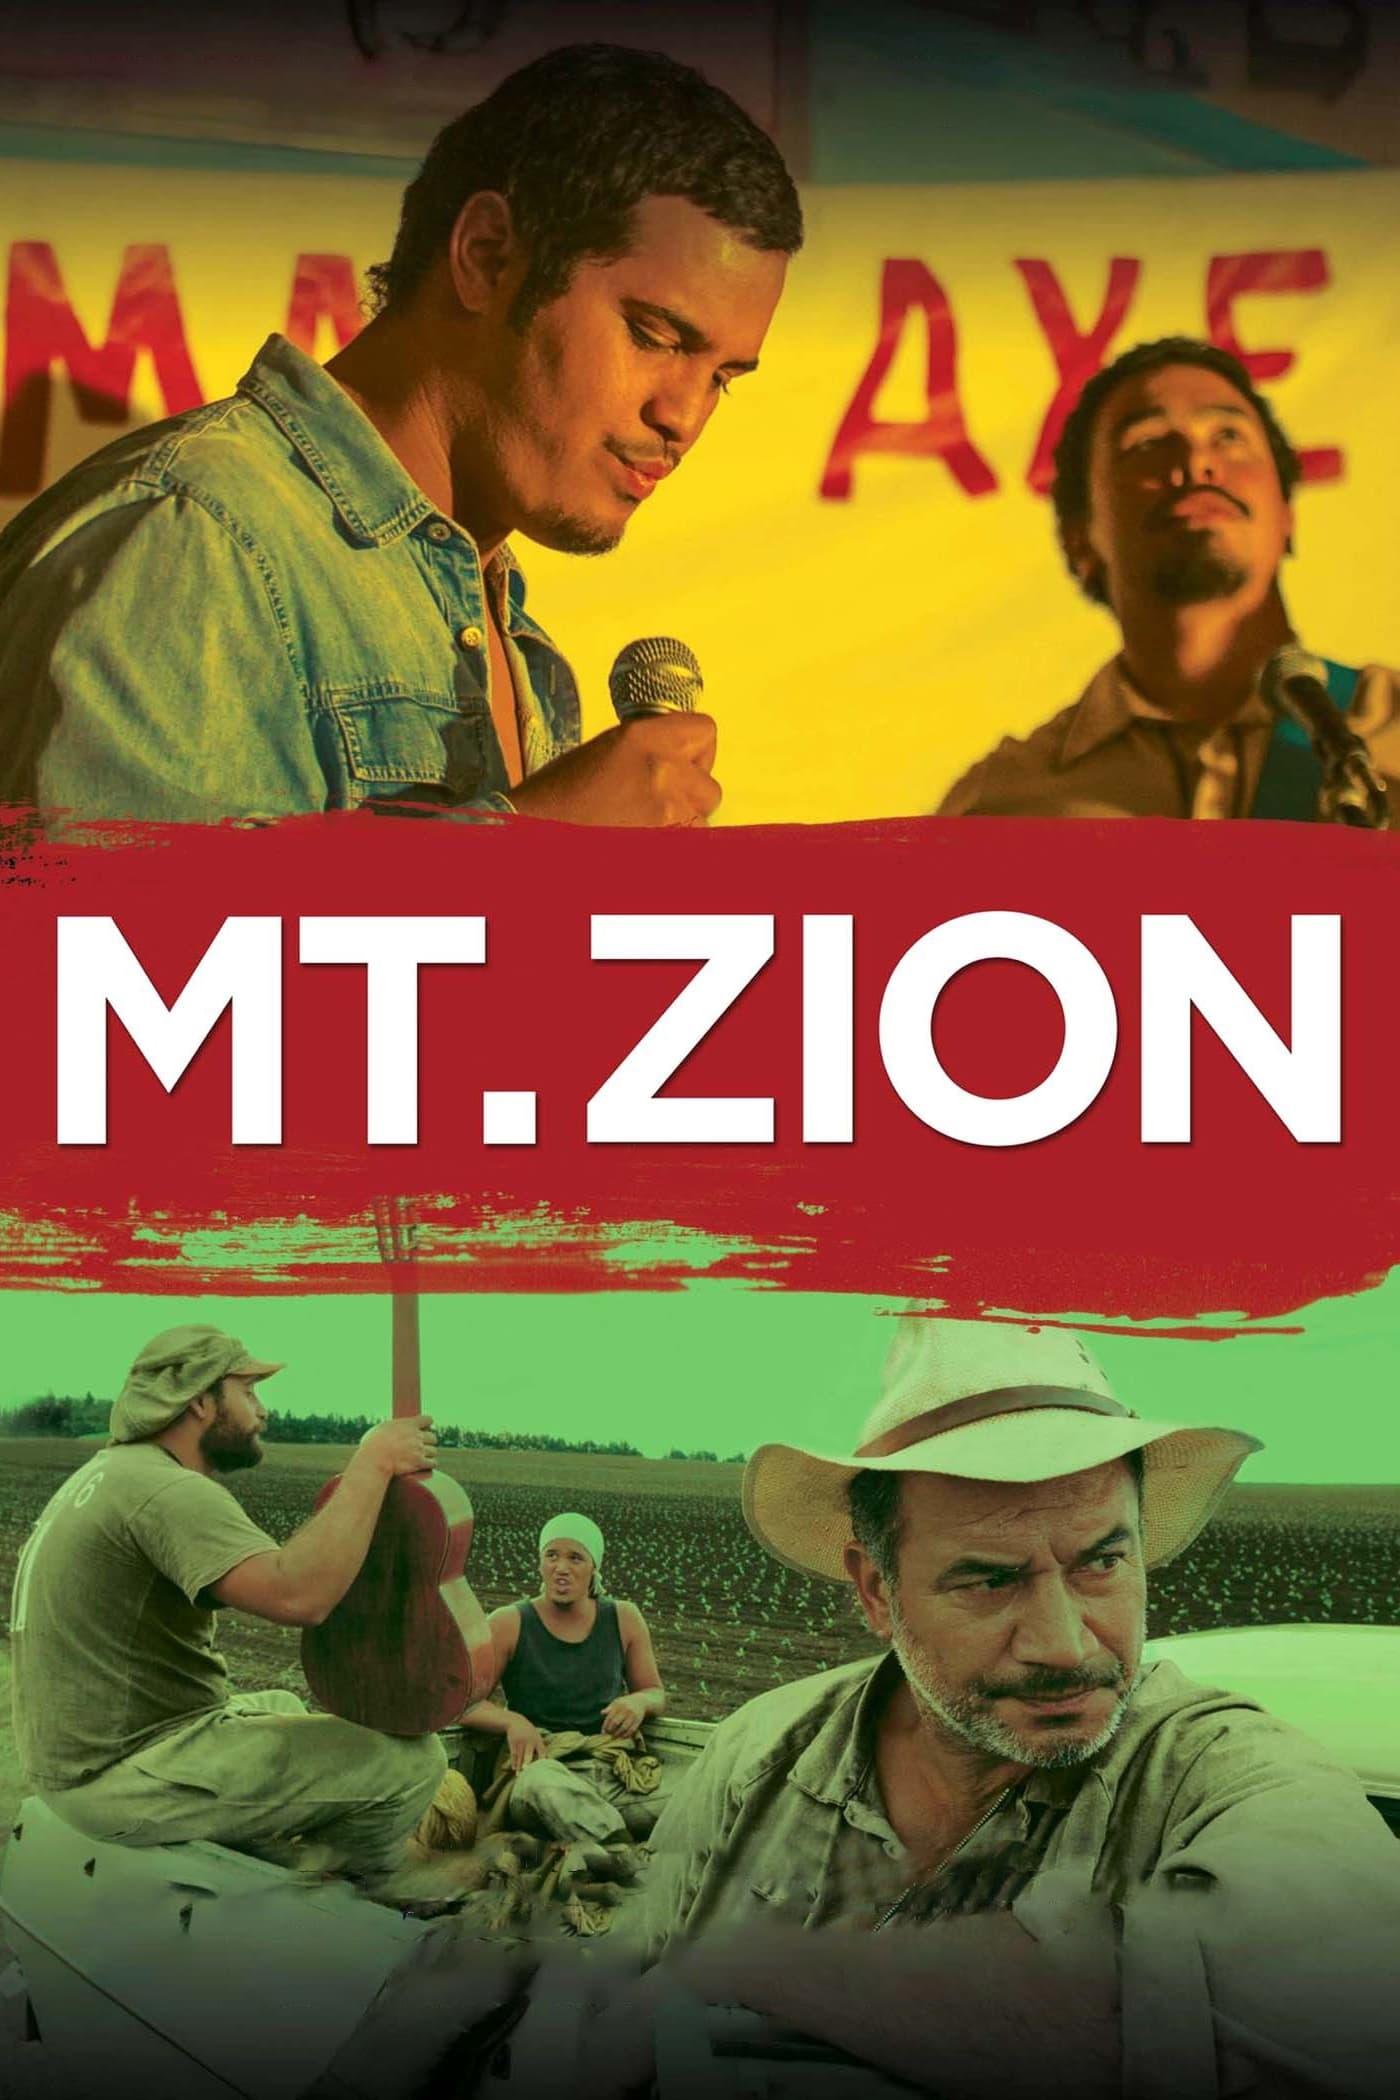 Mt. Zion poster